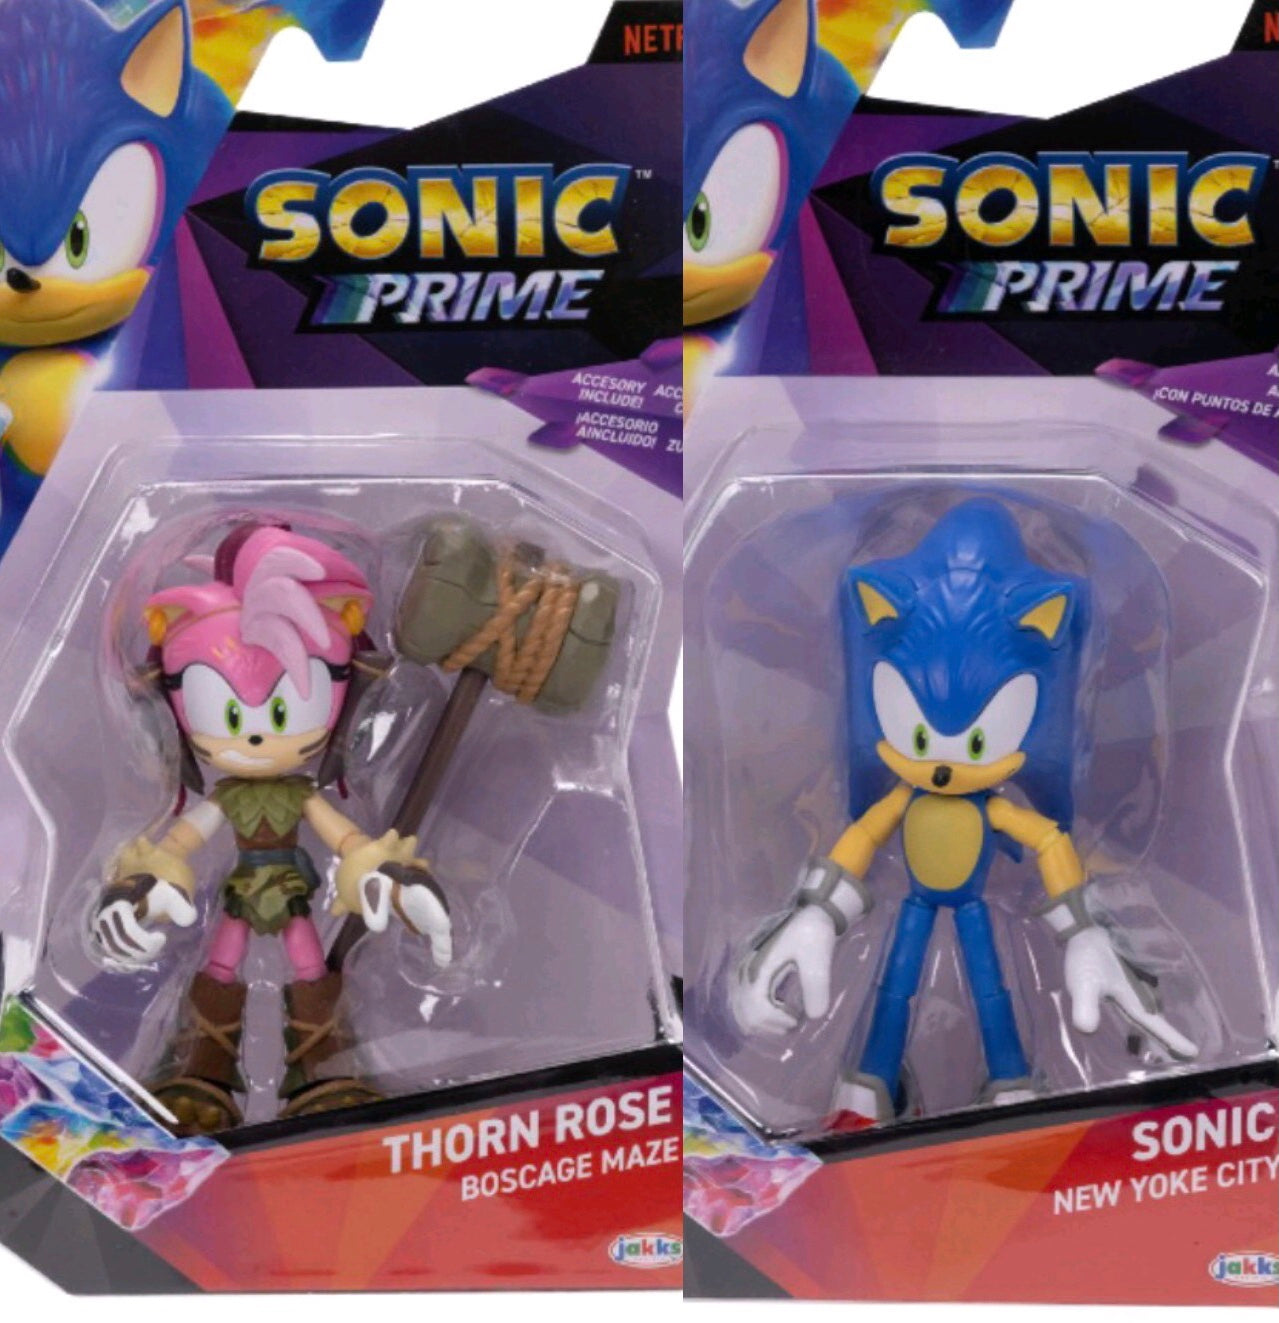 New Sonic Prime Season 3 Promotion